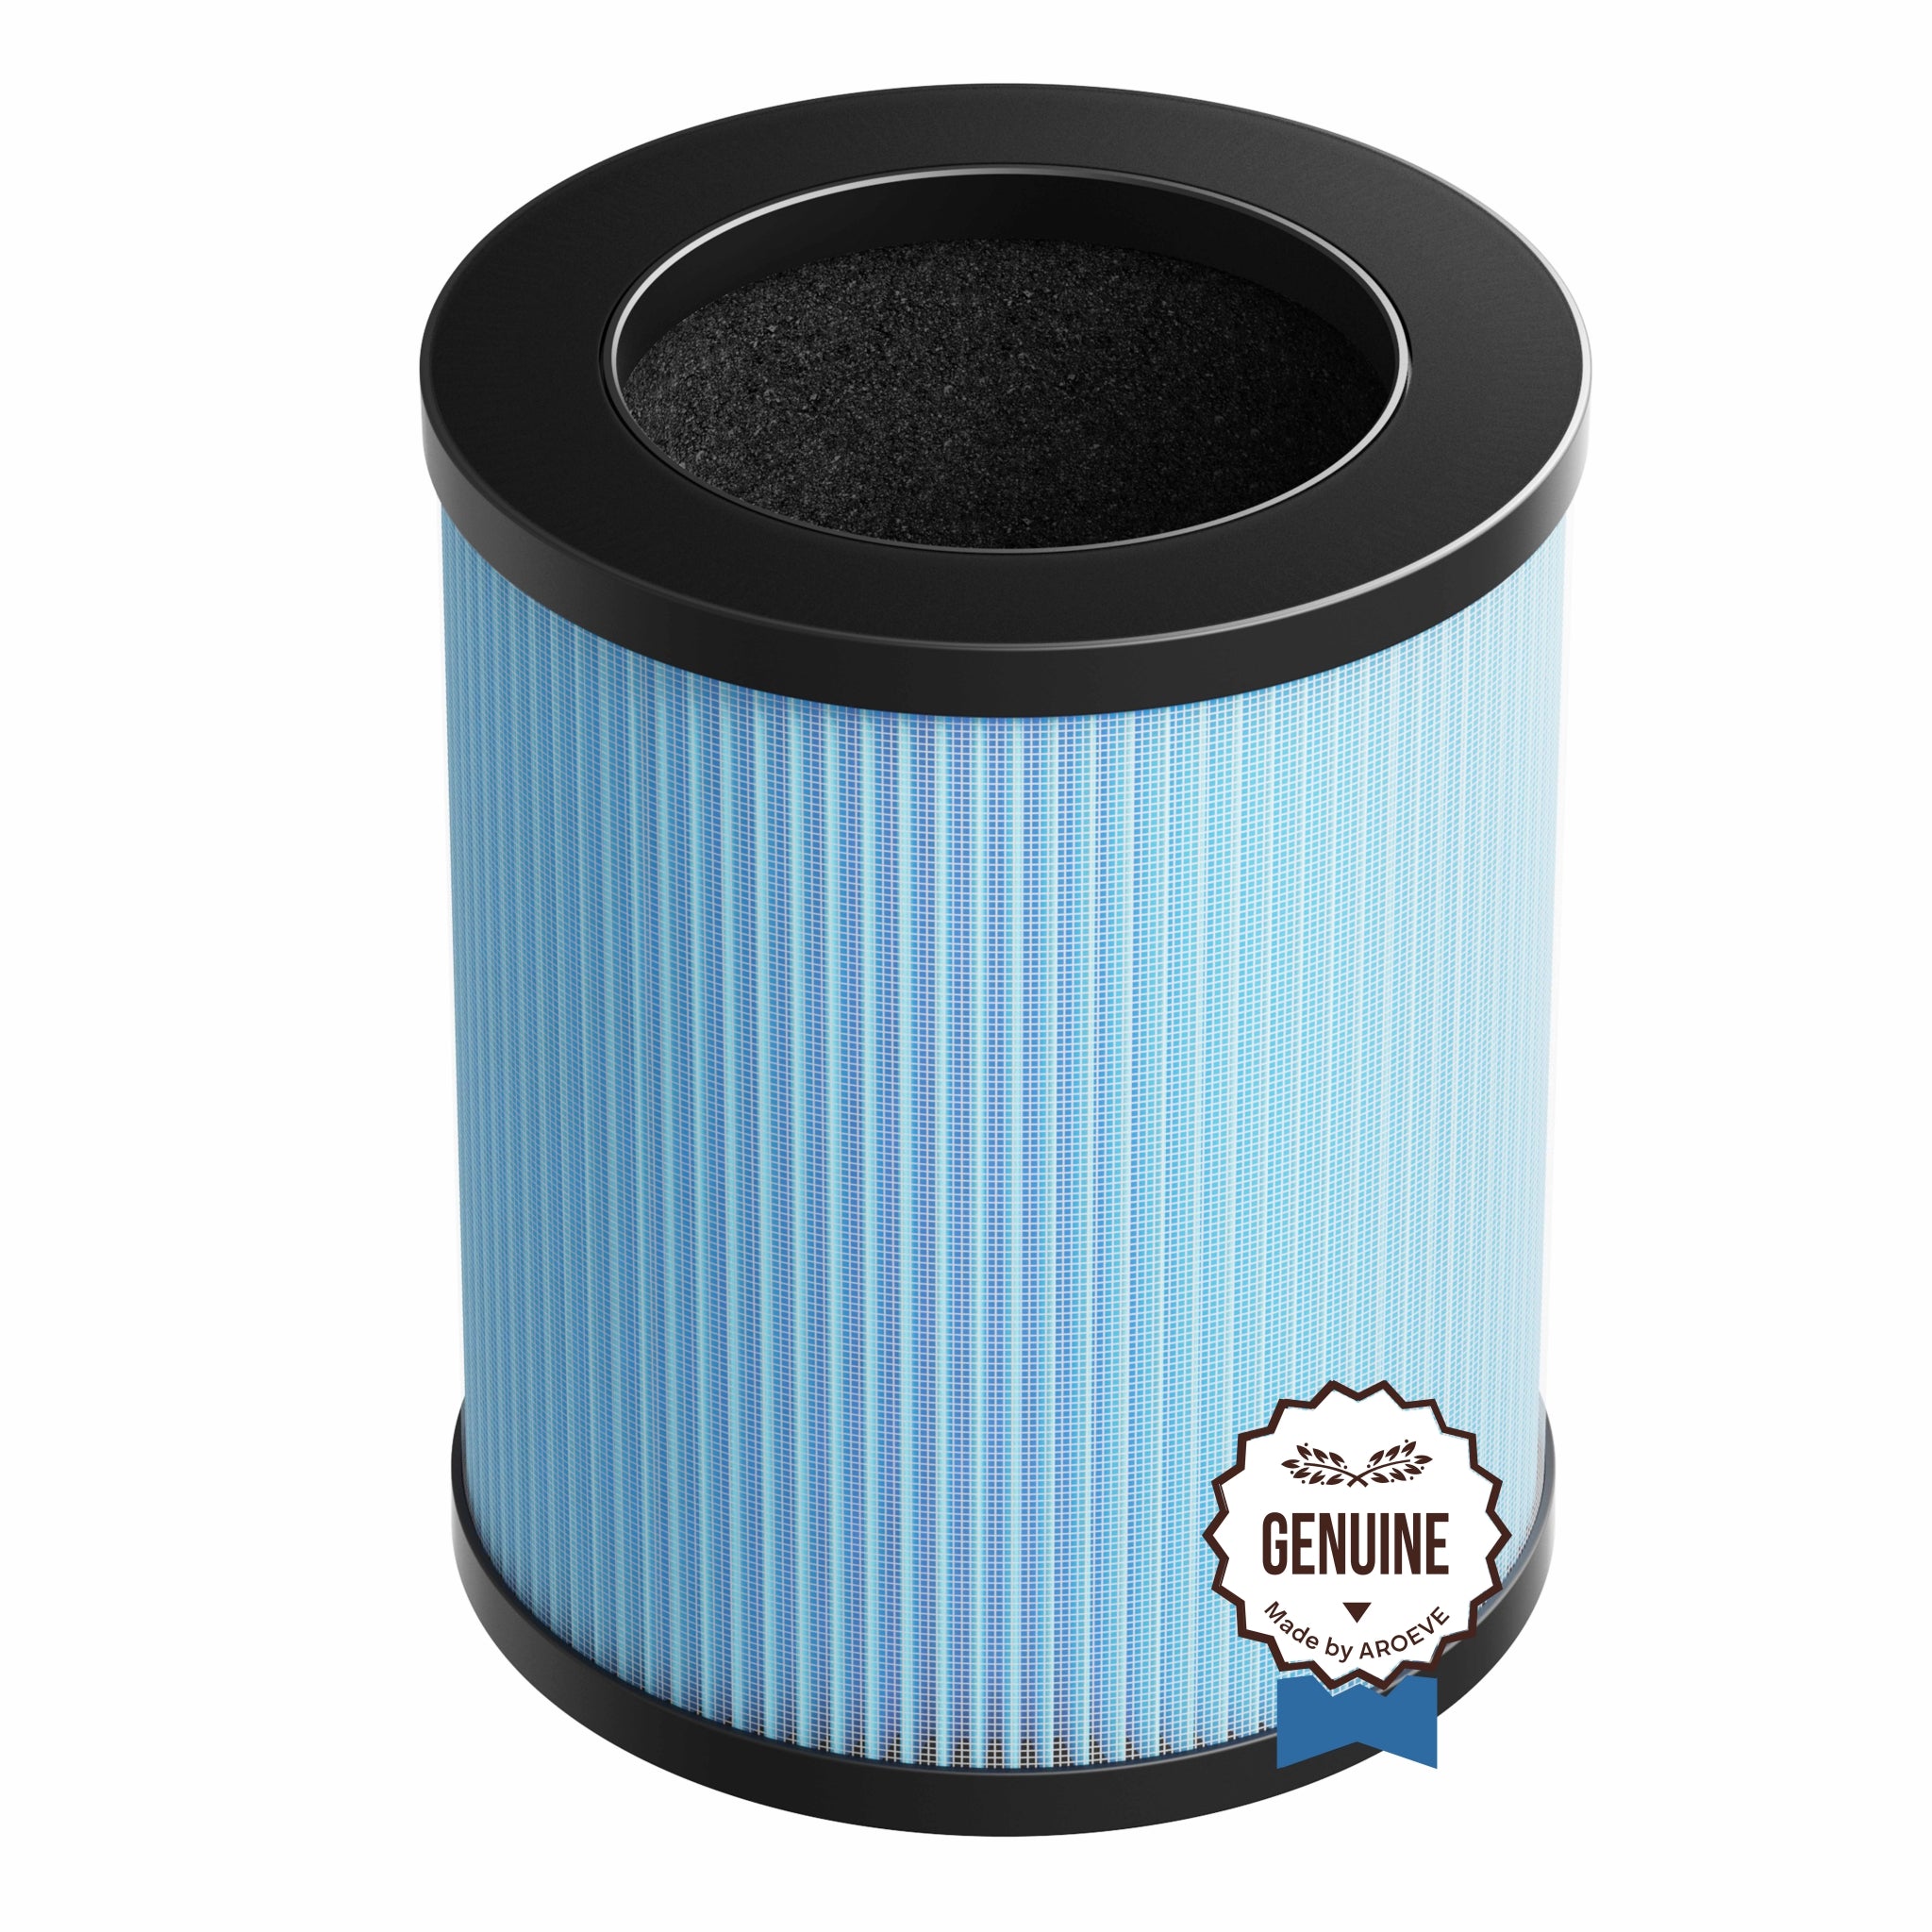 AROEVE HEPA Air Filter Replacement | MK03-Standard Version